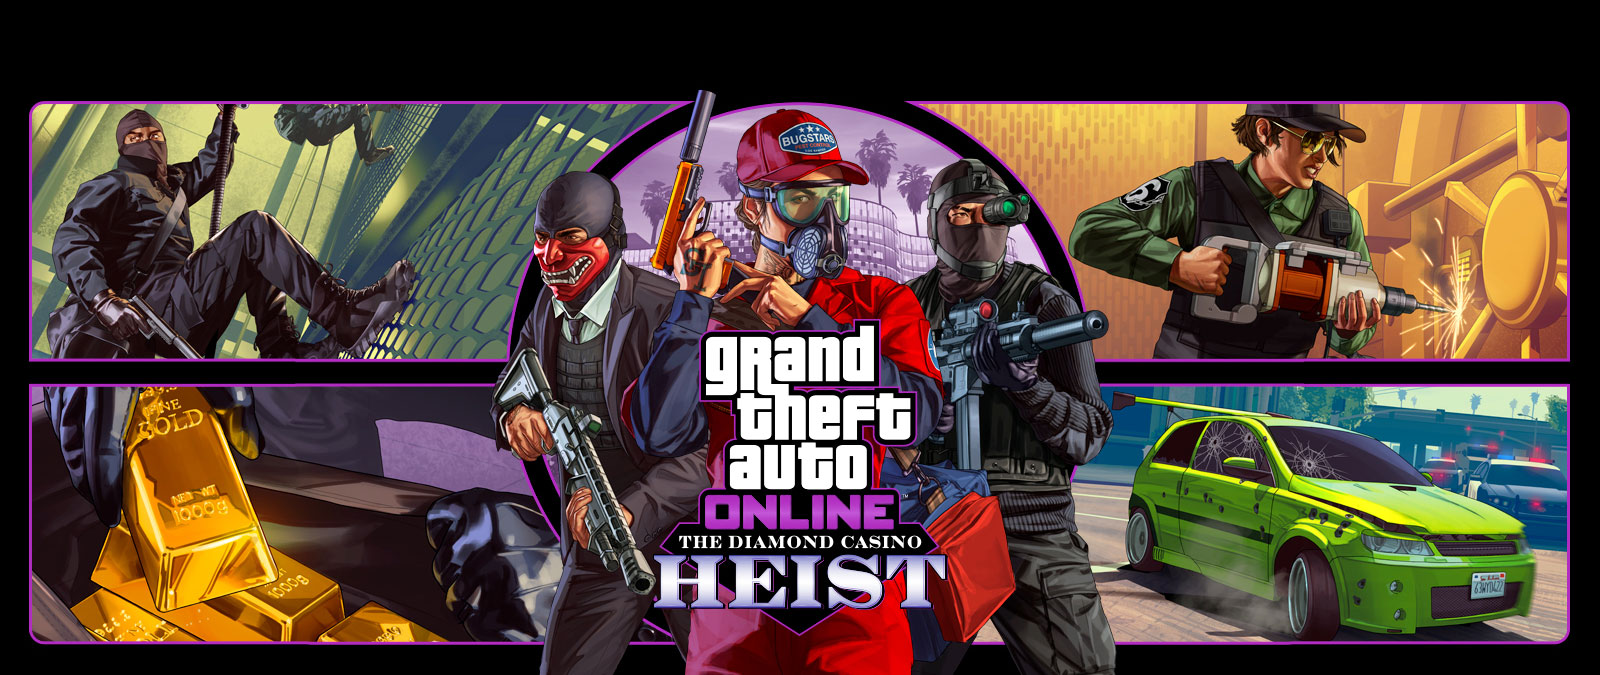 Grand Theft Auto Online, The Diamond Casino Heist